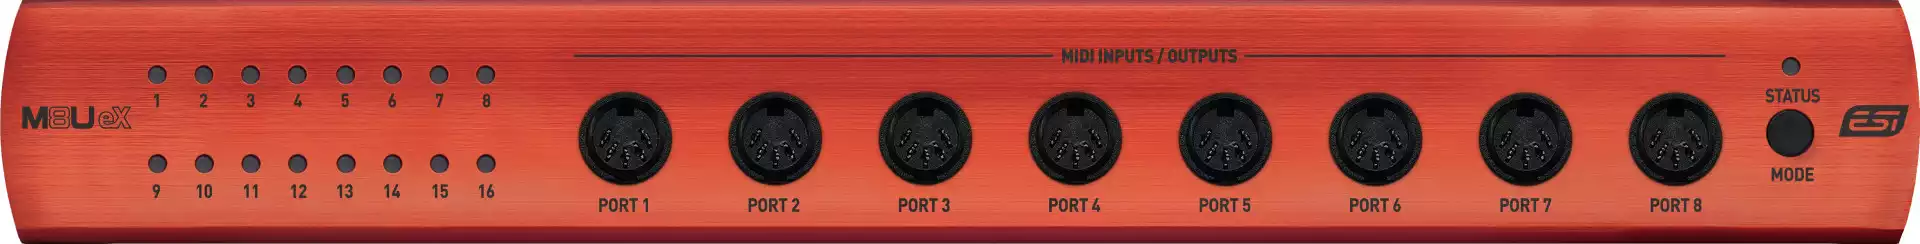 ESI M8U eX - USB MIDI zvučna kartica